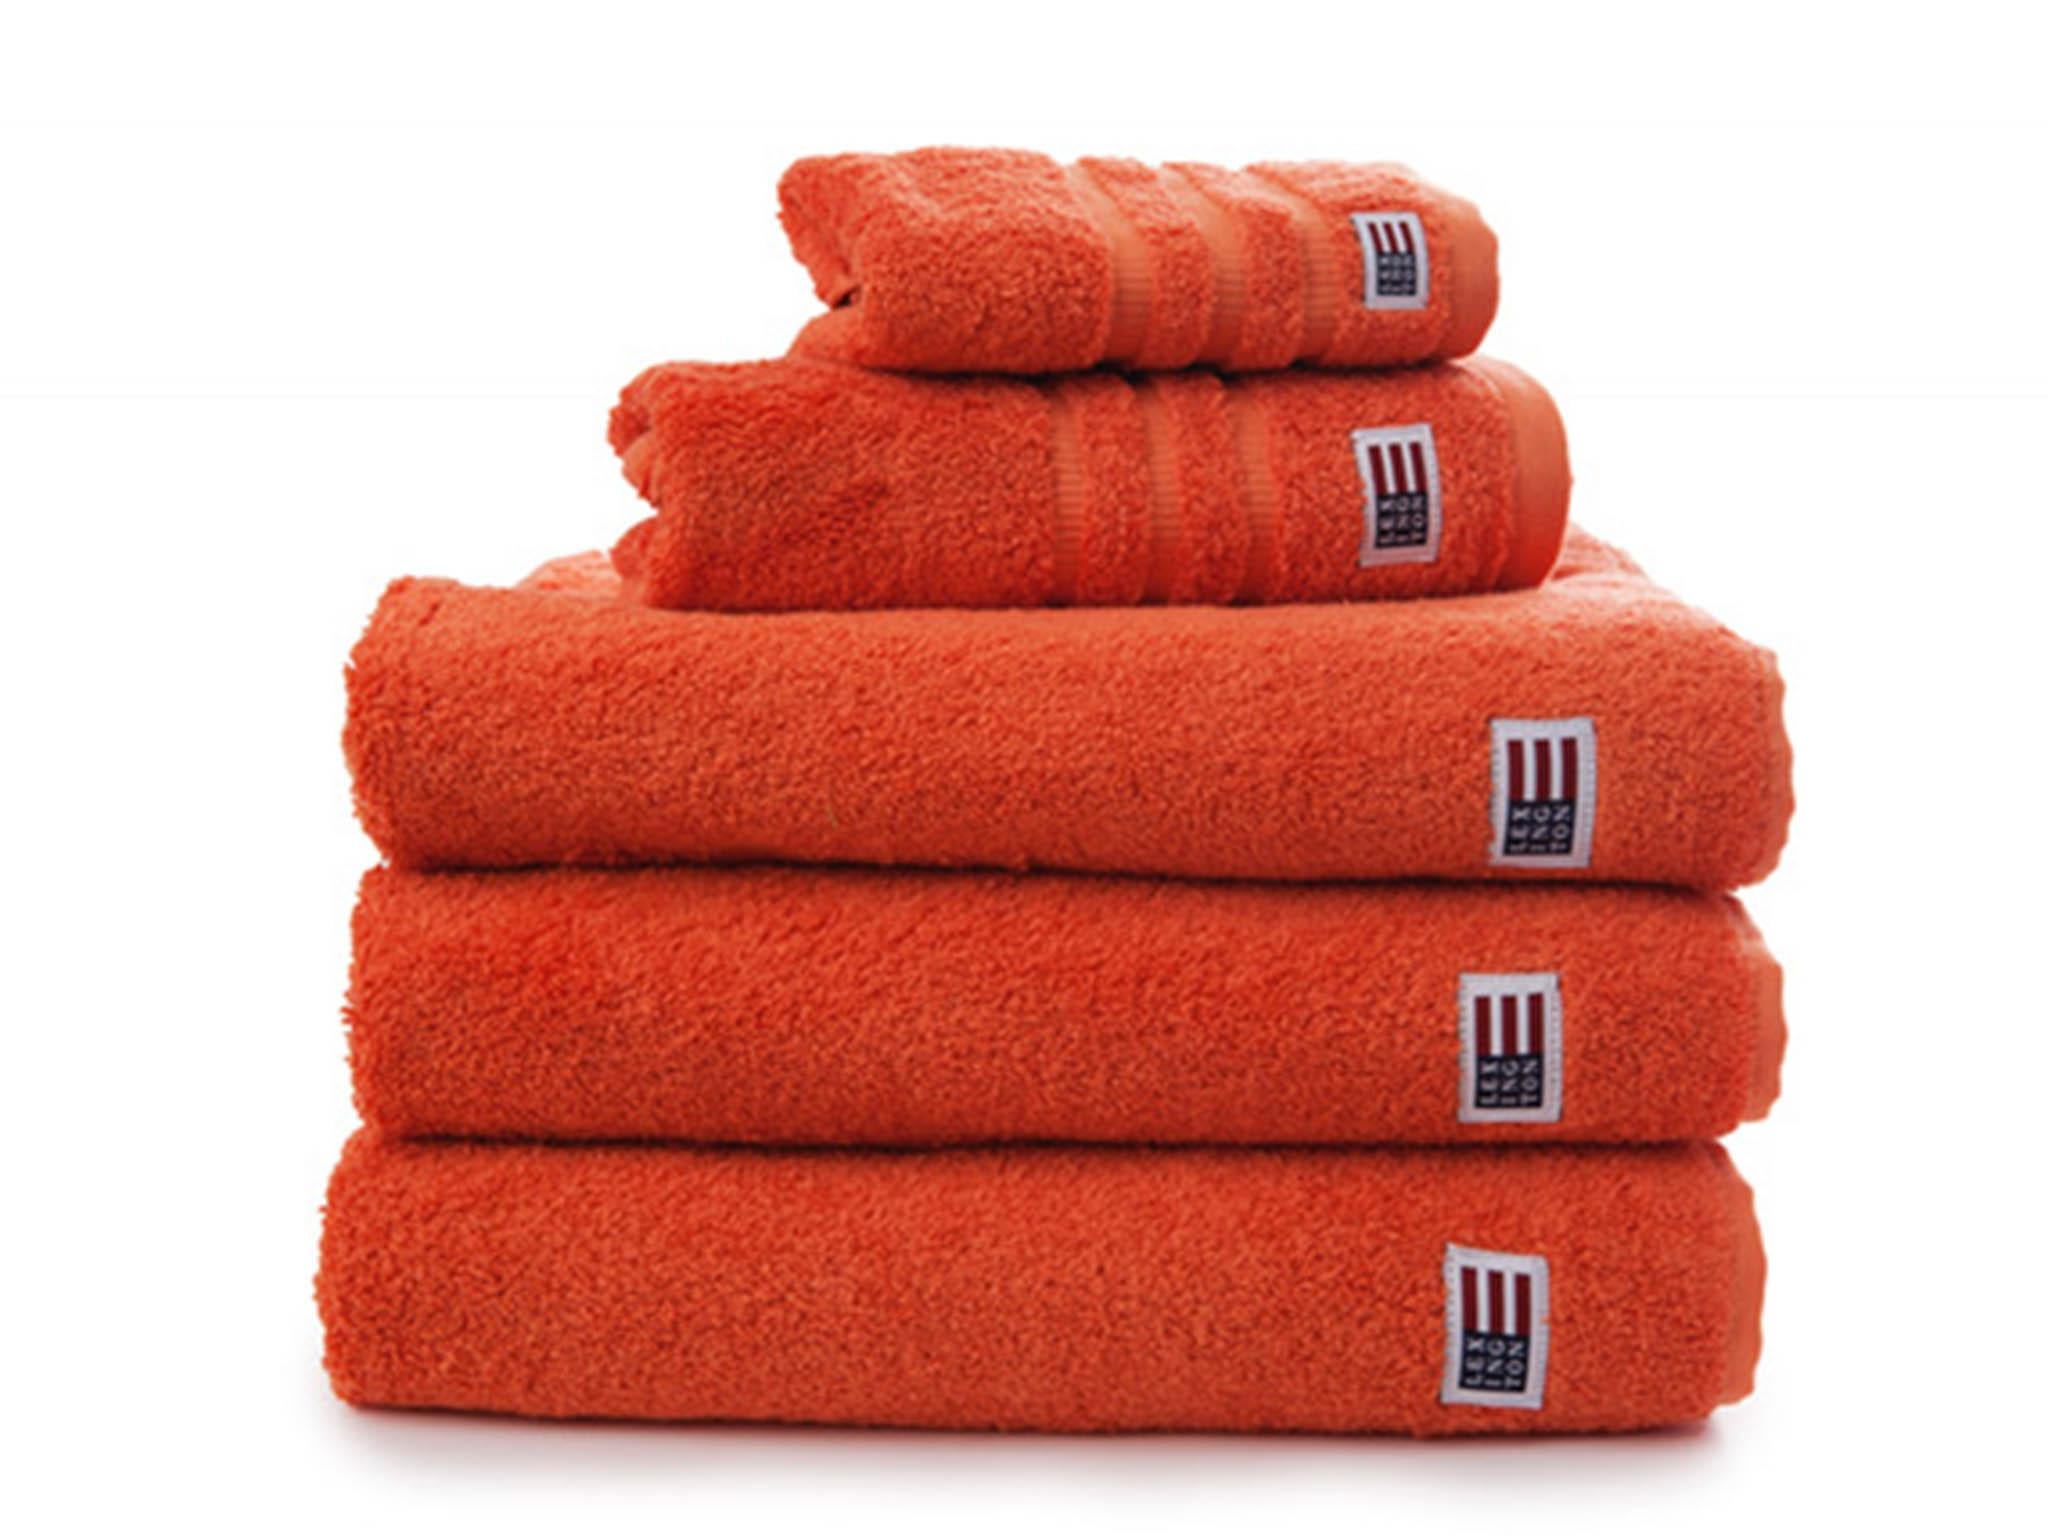 Soft orange original towel by Lexington, from £8